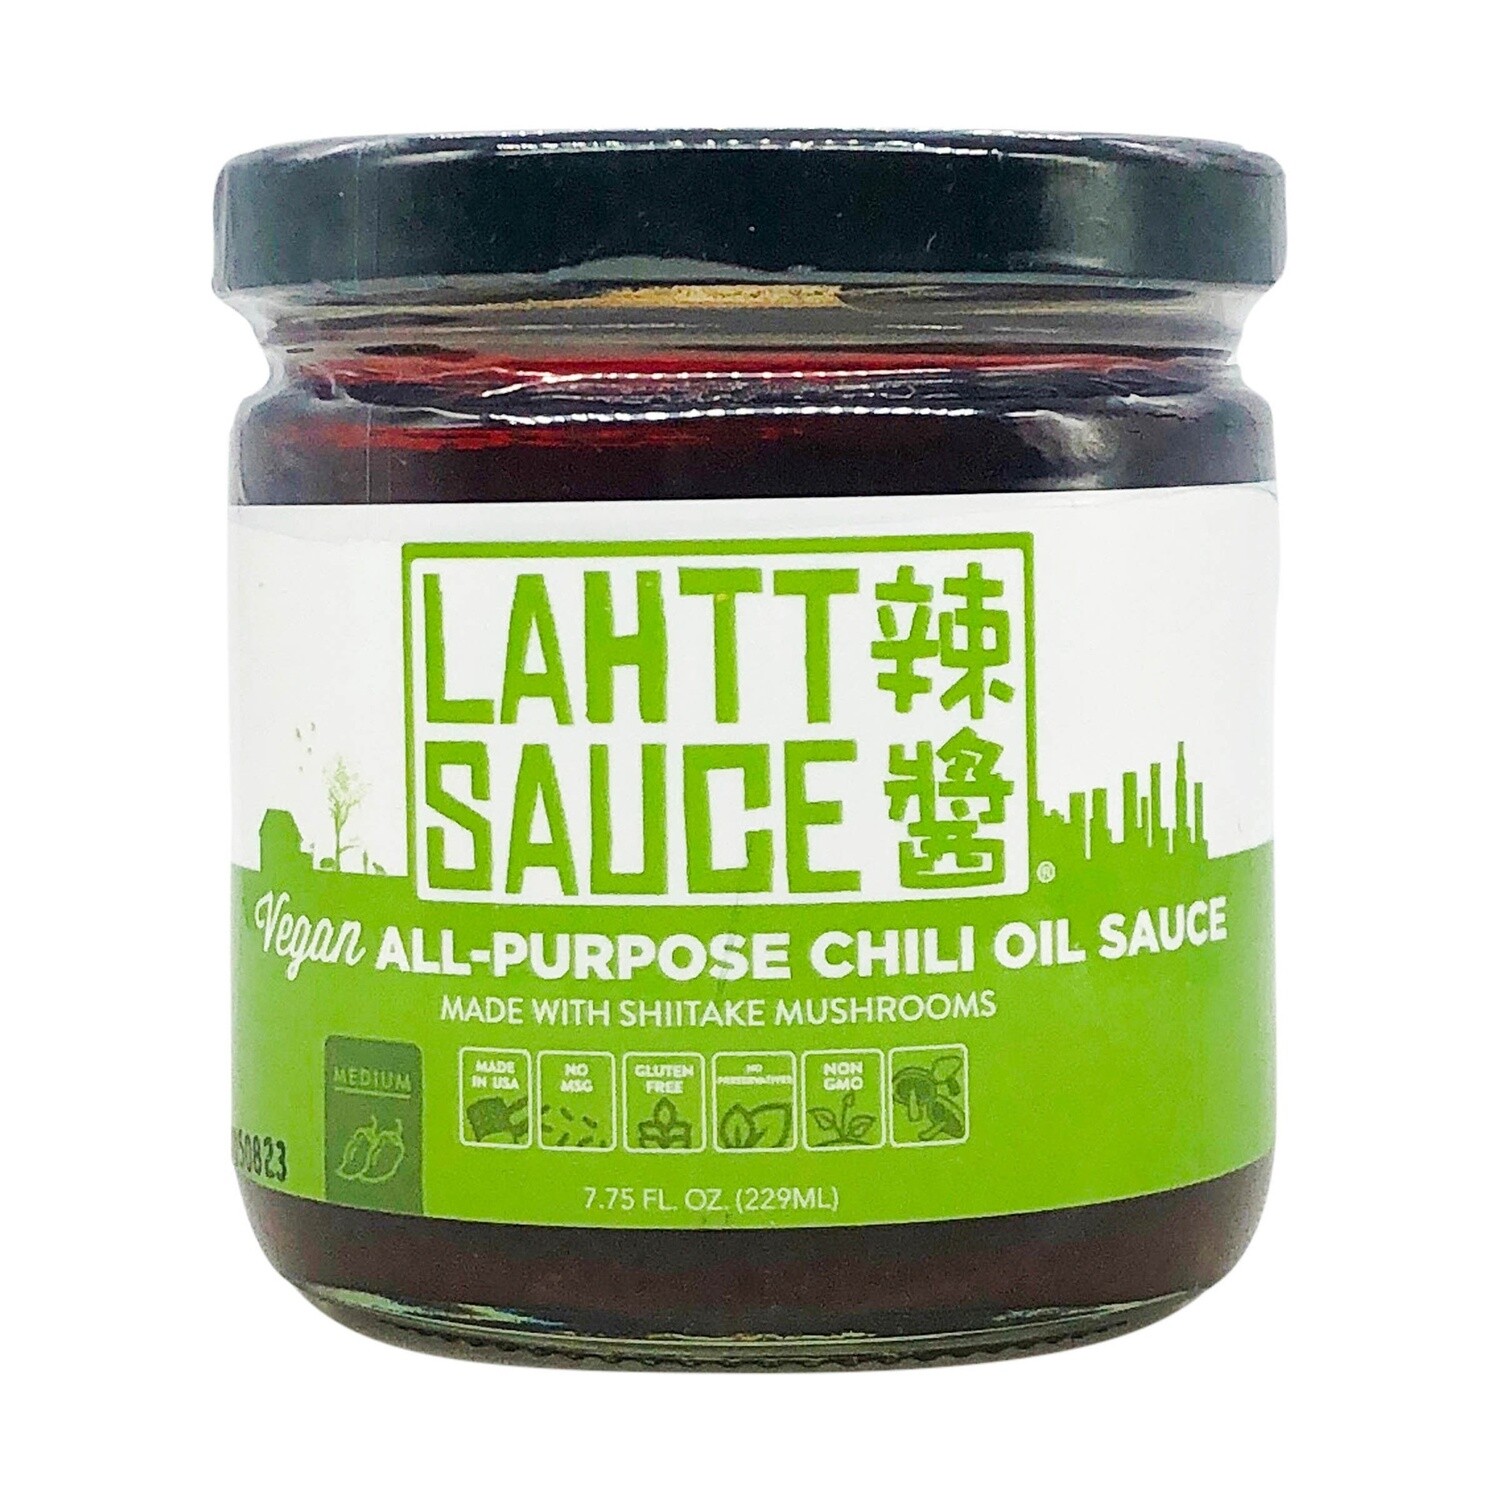 Chili Oil Vegan - Lhatt Sauce - 7.75 oz.